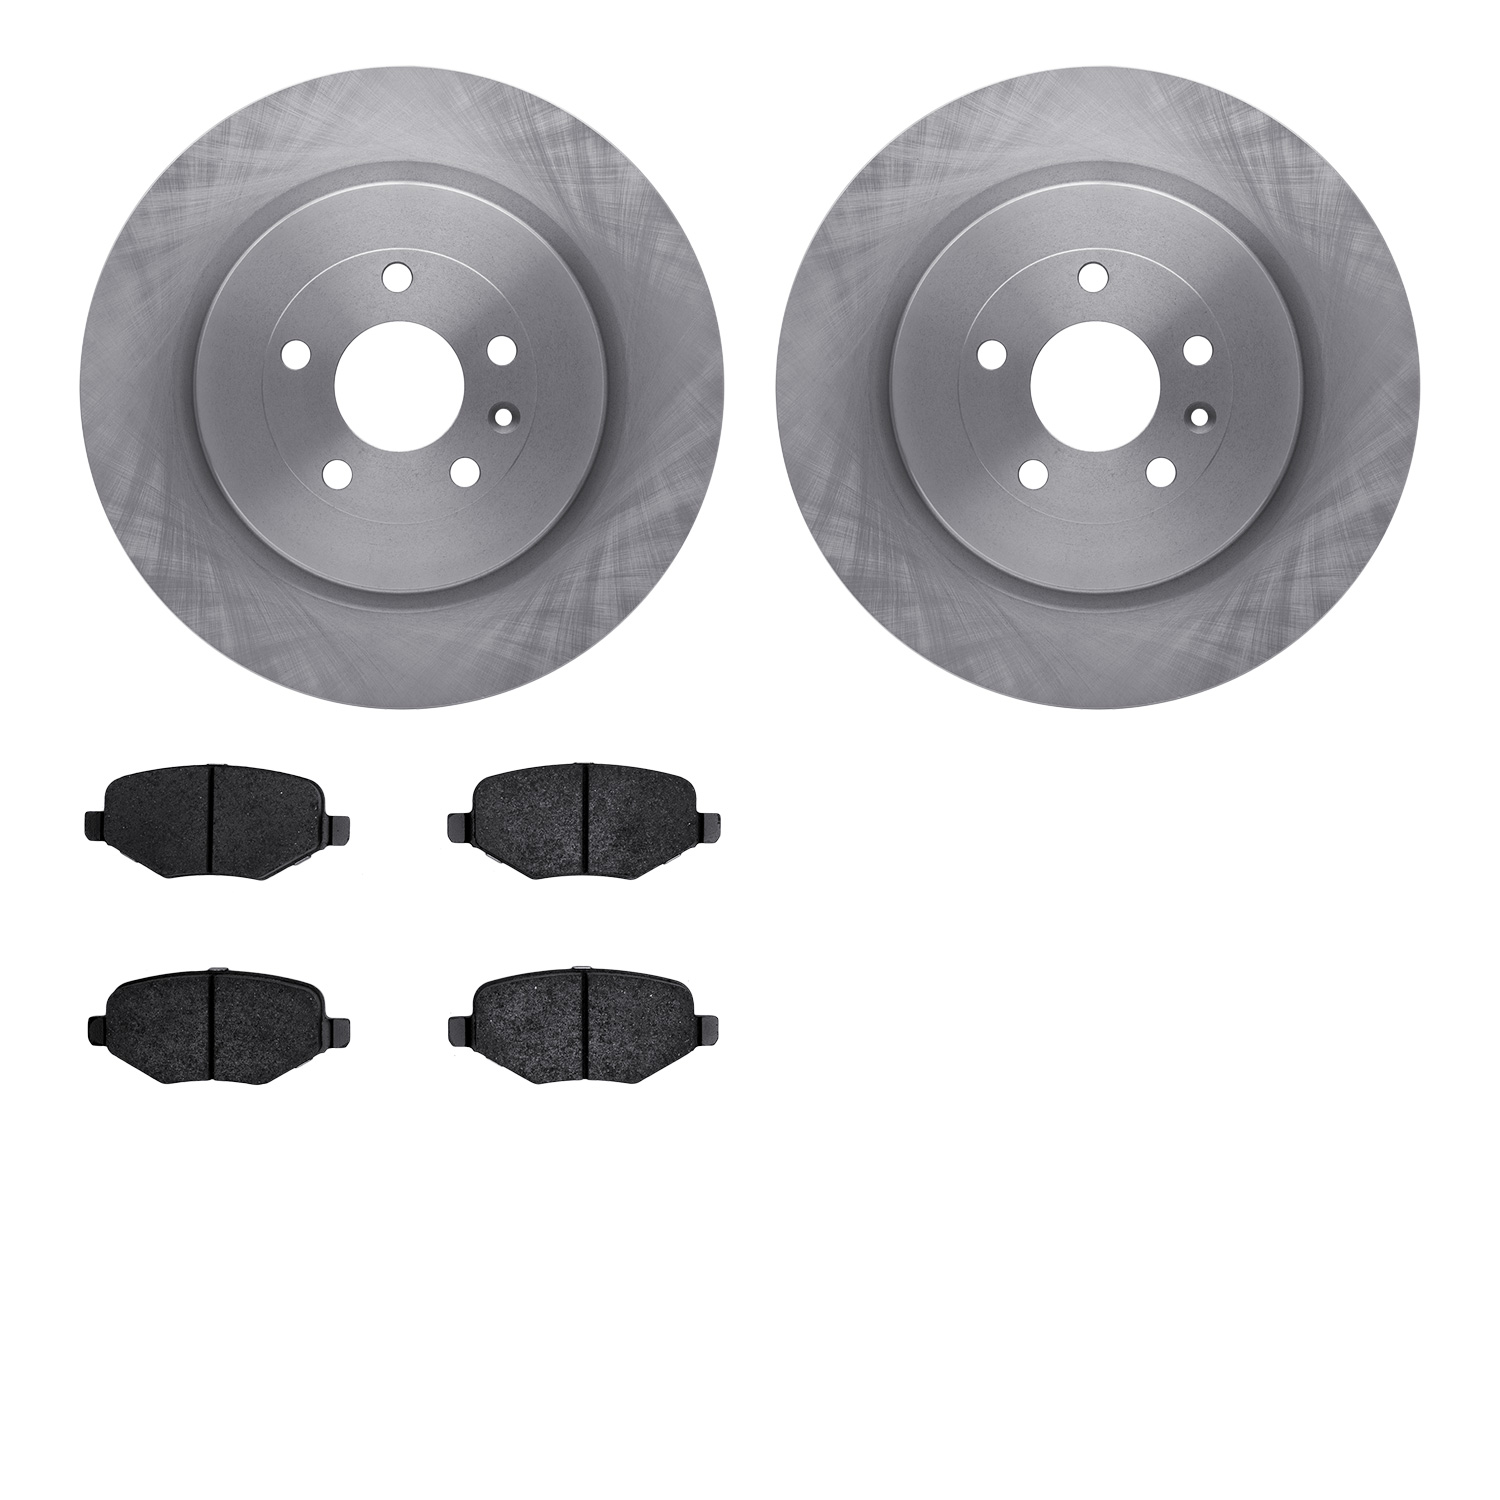 6302-54195 Brake Rotors with 3000-Series Ceramic Brake Pads Kit, 2013-2019 Ford/Lincoln/Mercury/Mazda, Position: Rear